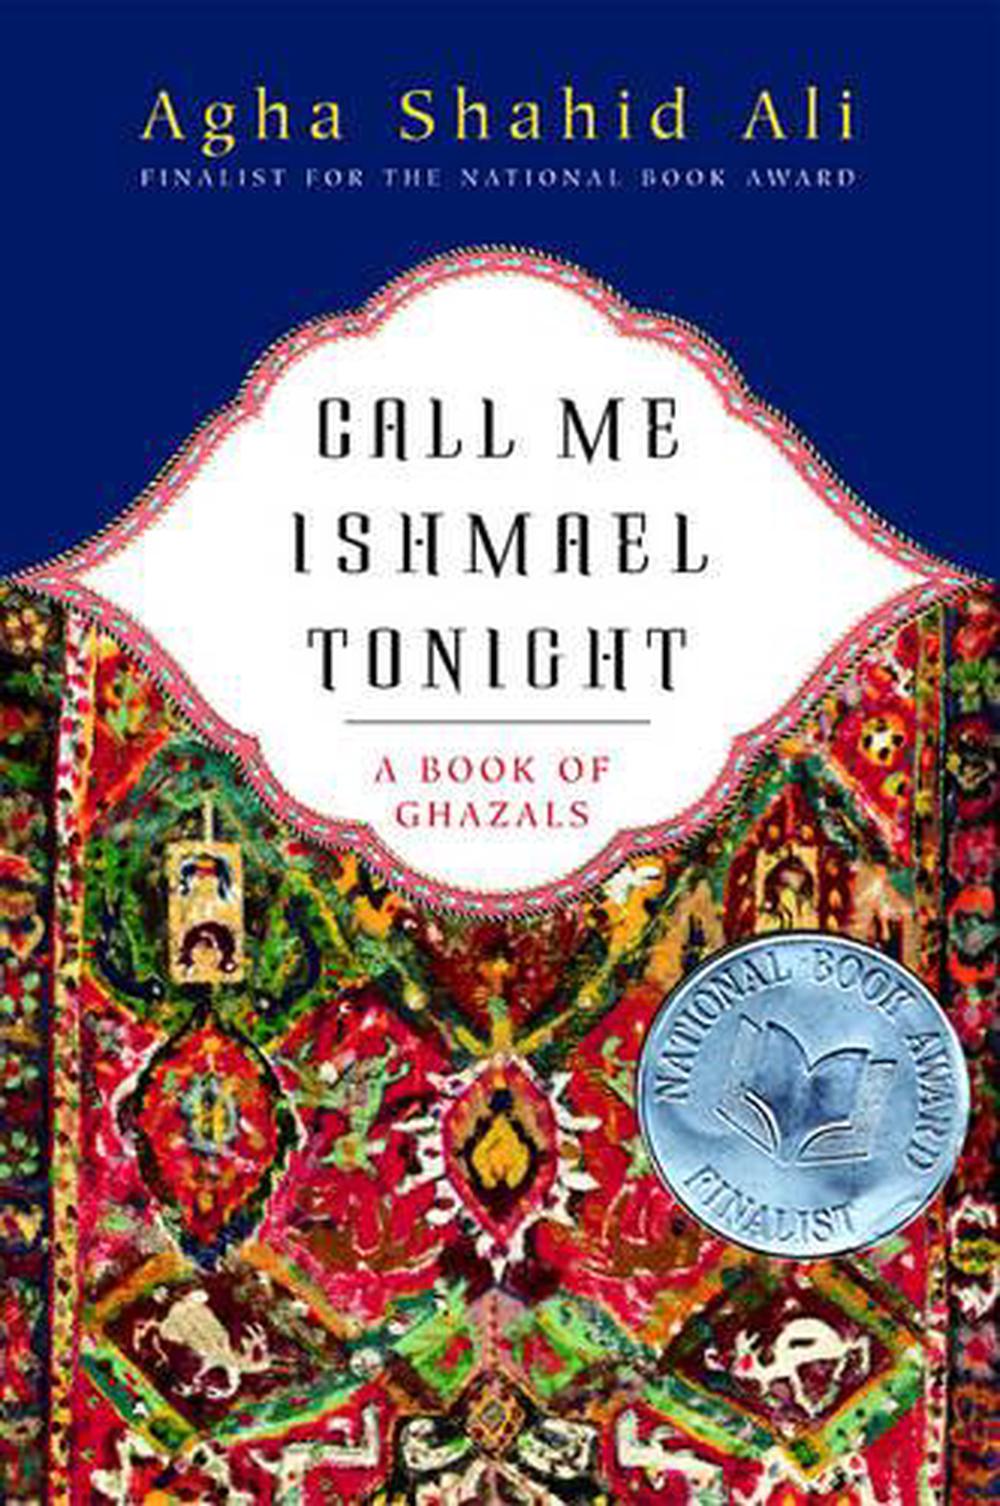 Call Me Ishmael Tonight A Book of Ghazals by Agha Shahid Ali (English